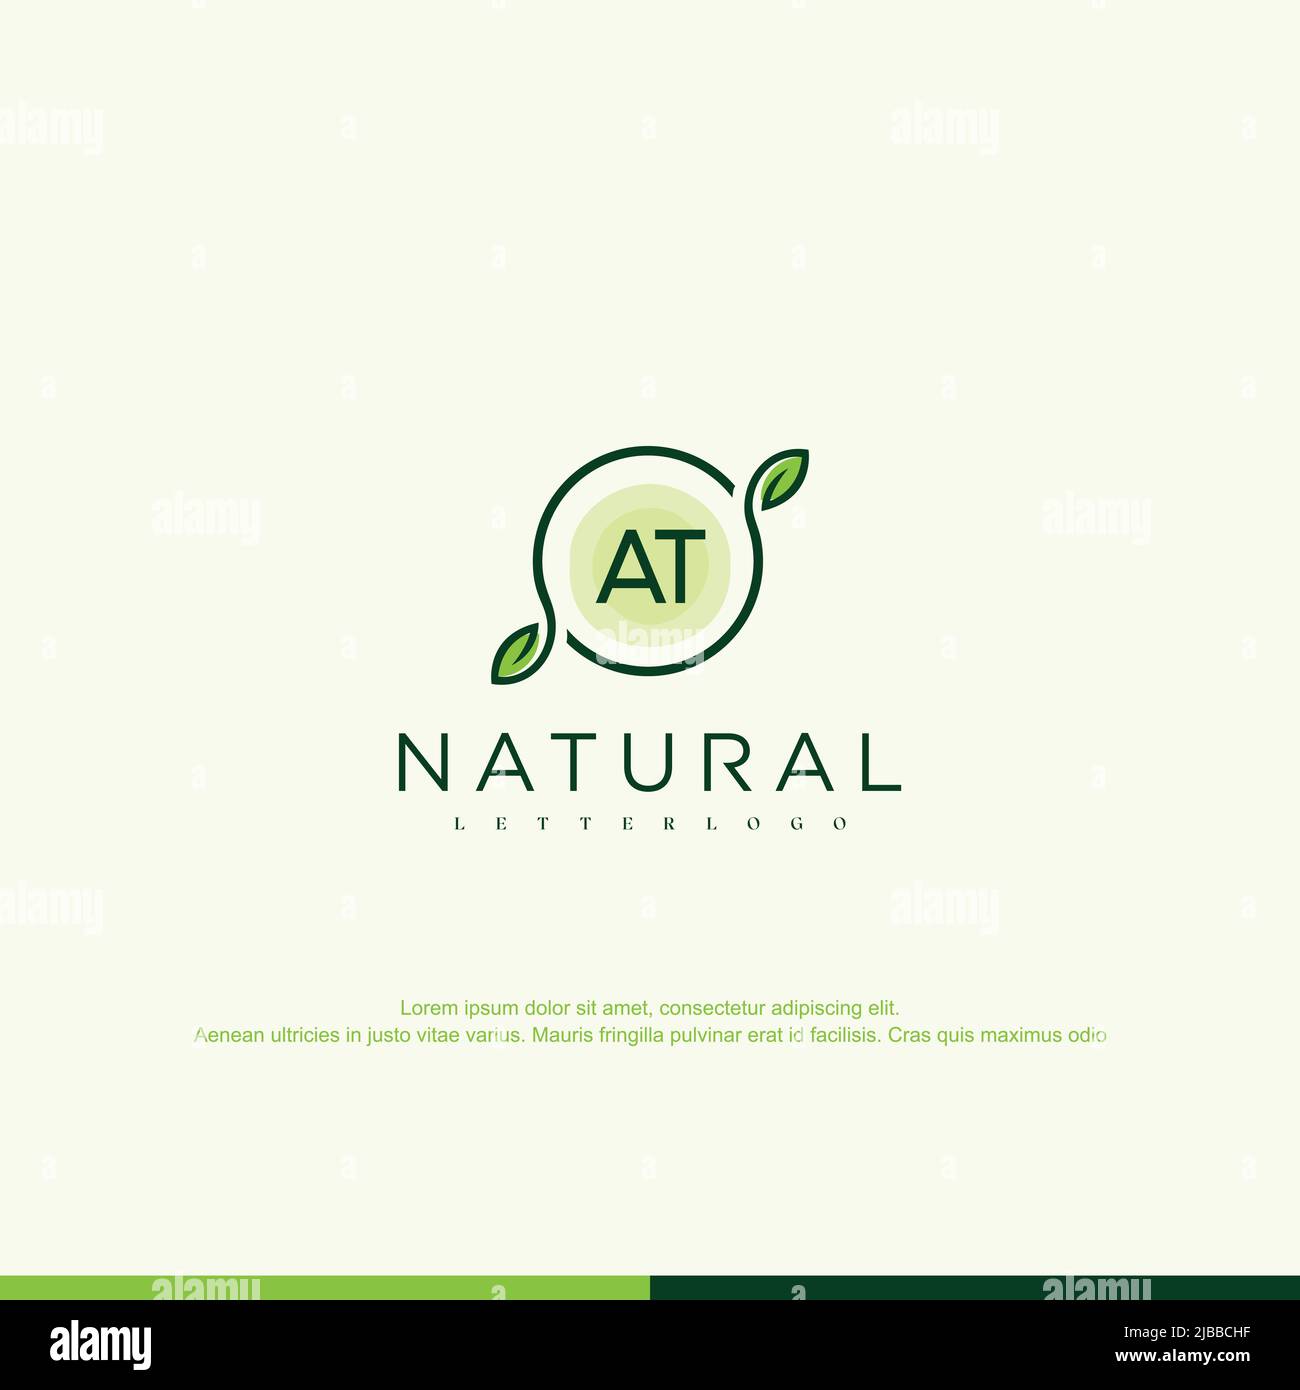 AT Initial natural logo template vector Stock Vector